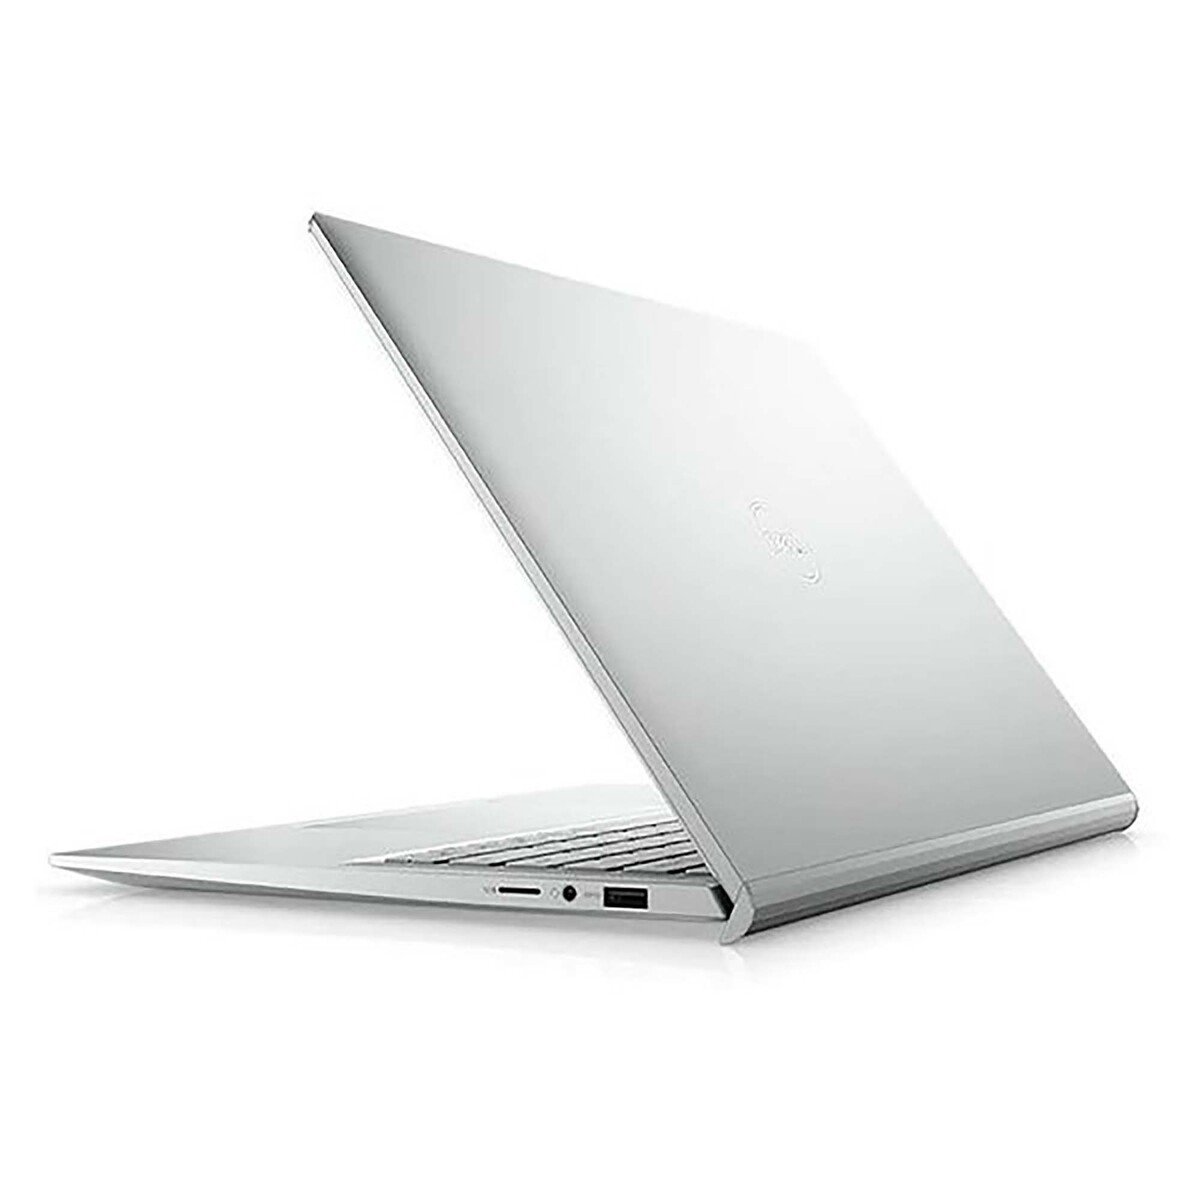 Dell Inspiron 14 7400 Laptop(7400-INS-0105-SLV), Core i5-1135G7, 8GB RAM, 256GB SSD, Intel Iris Xe Shared Graphics, 14.5inch Display, Windows 10, Silver